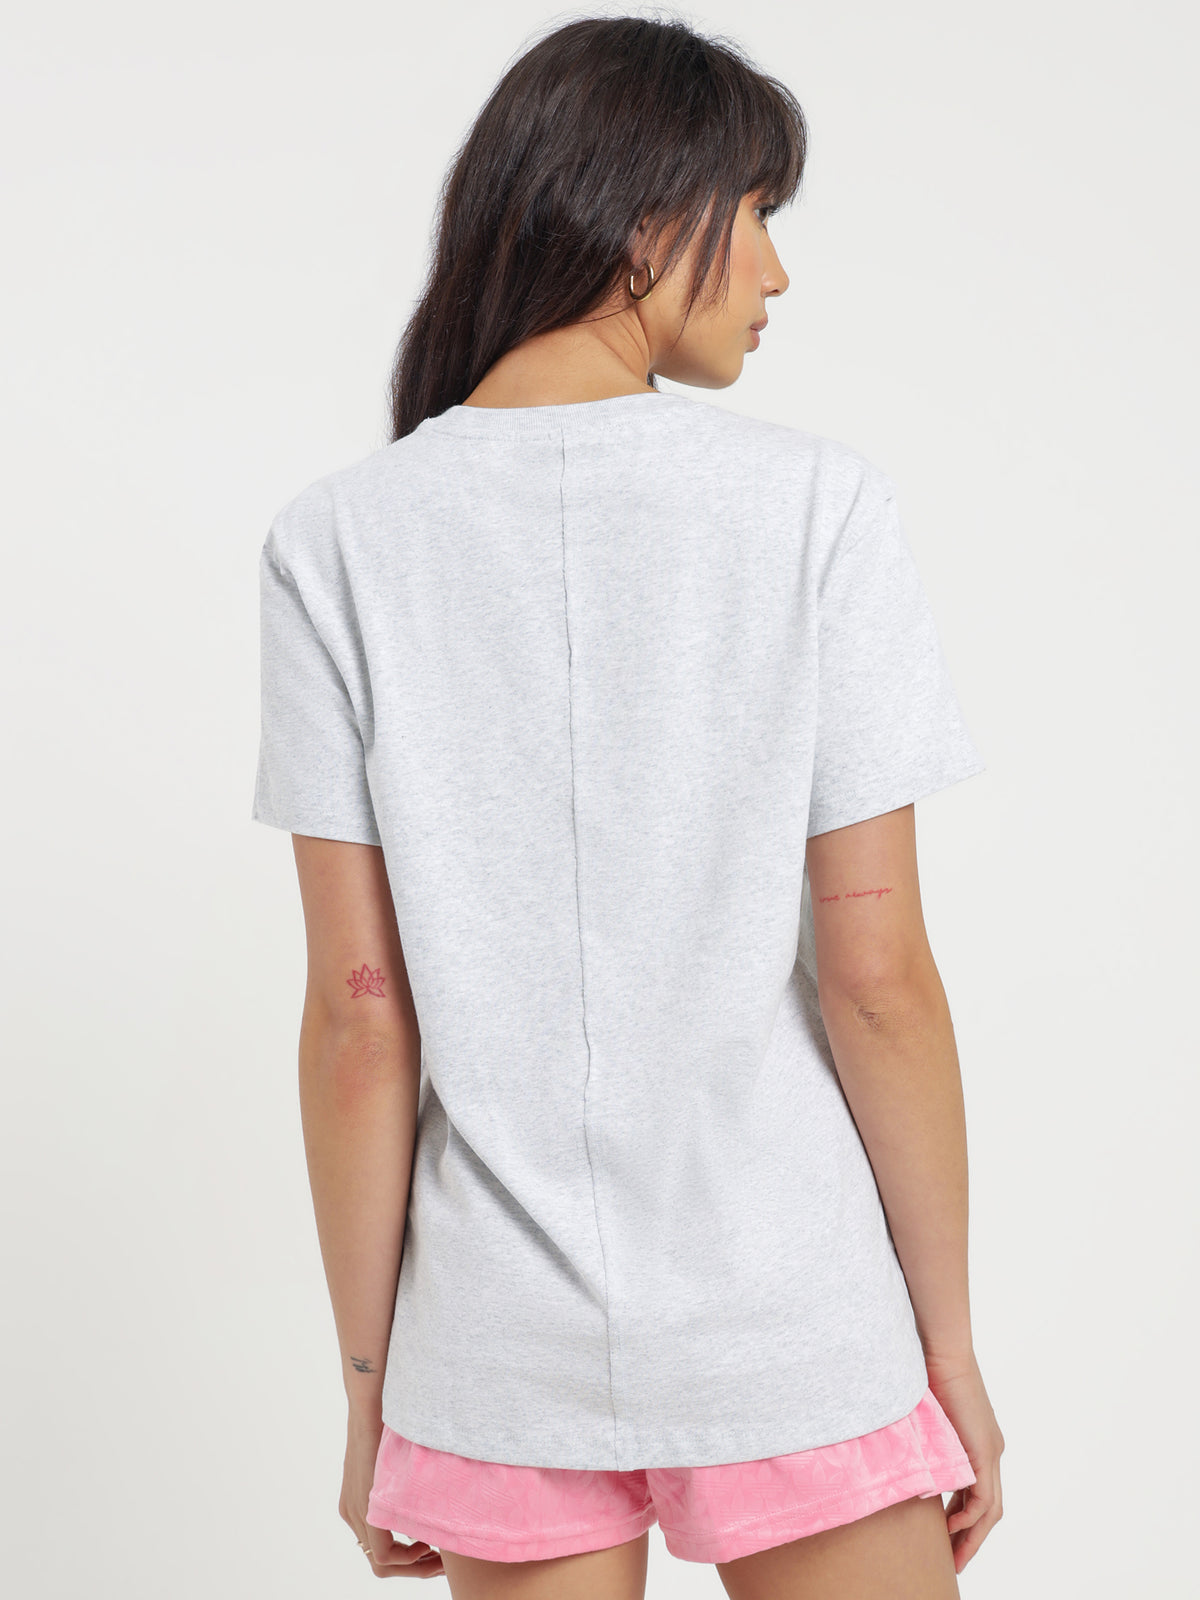 Loose Loungewear T-Shirt in Light Grey Heather